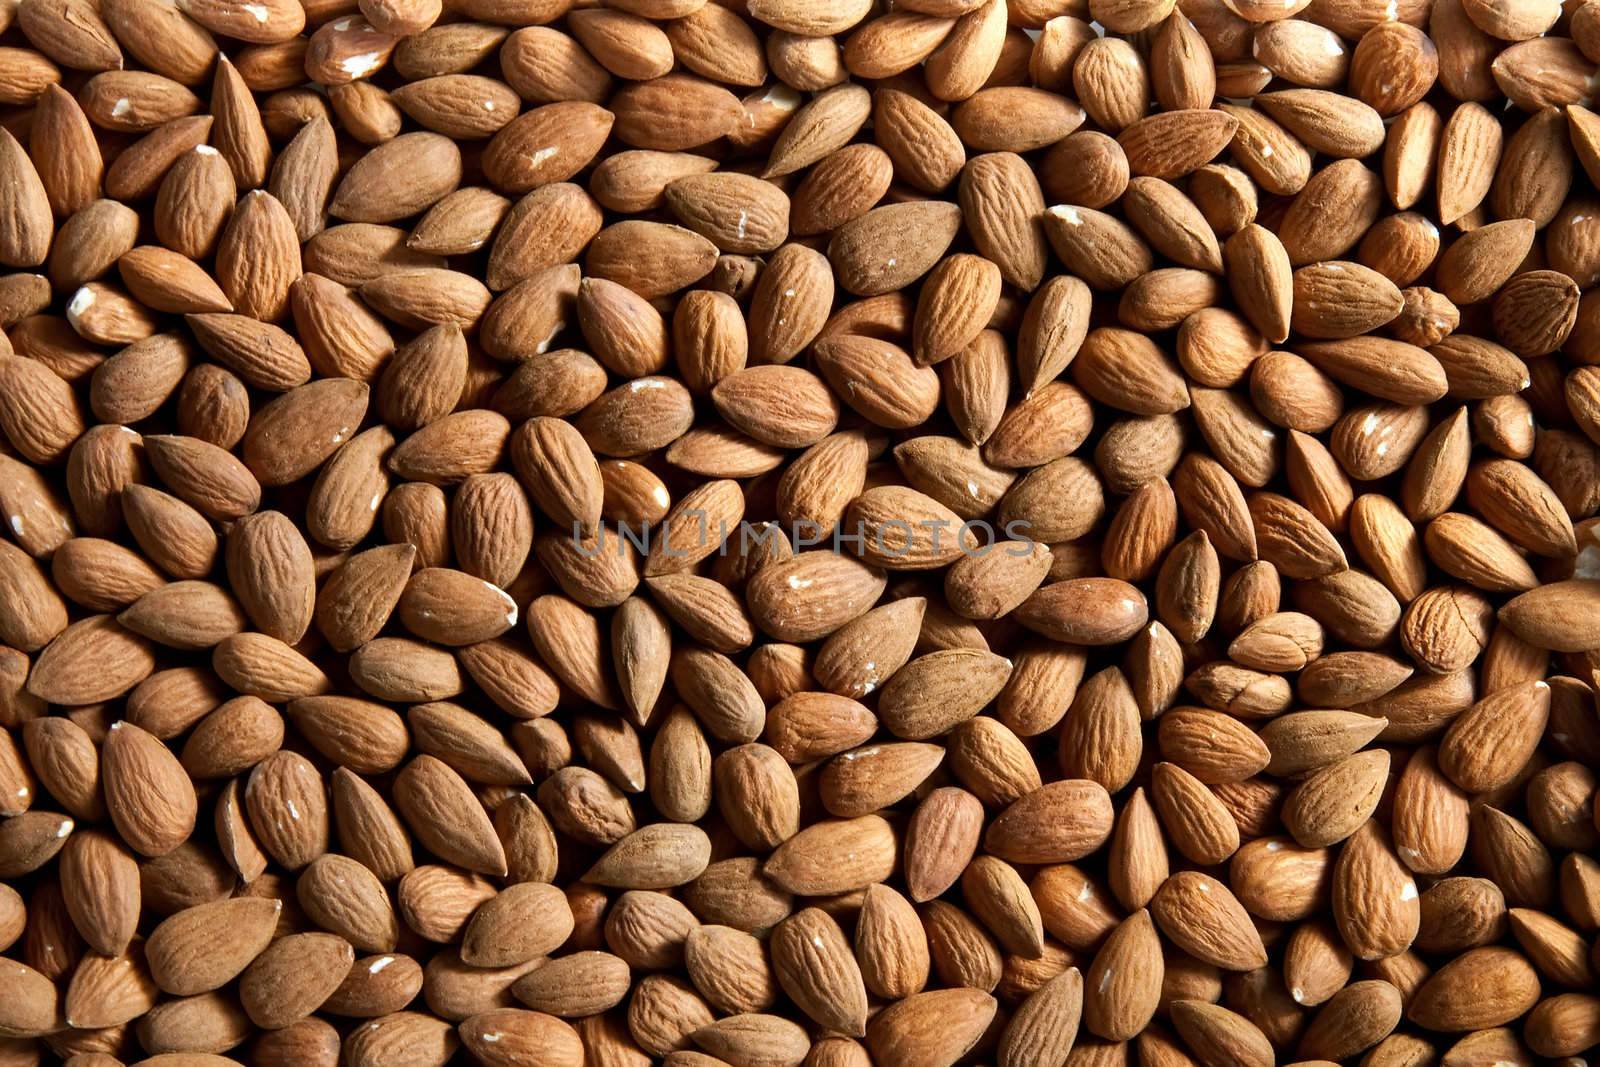 Almonds small by raliand